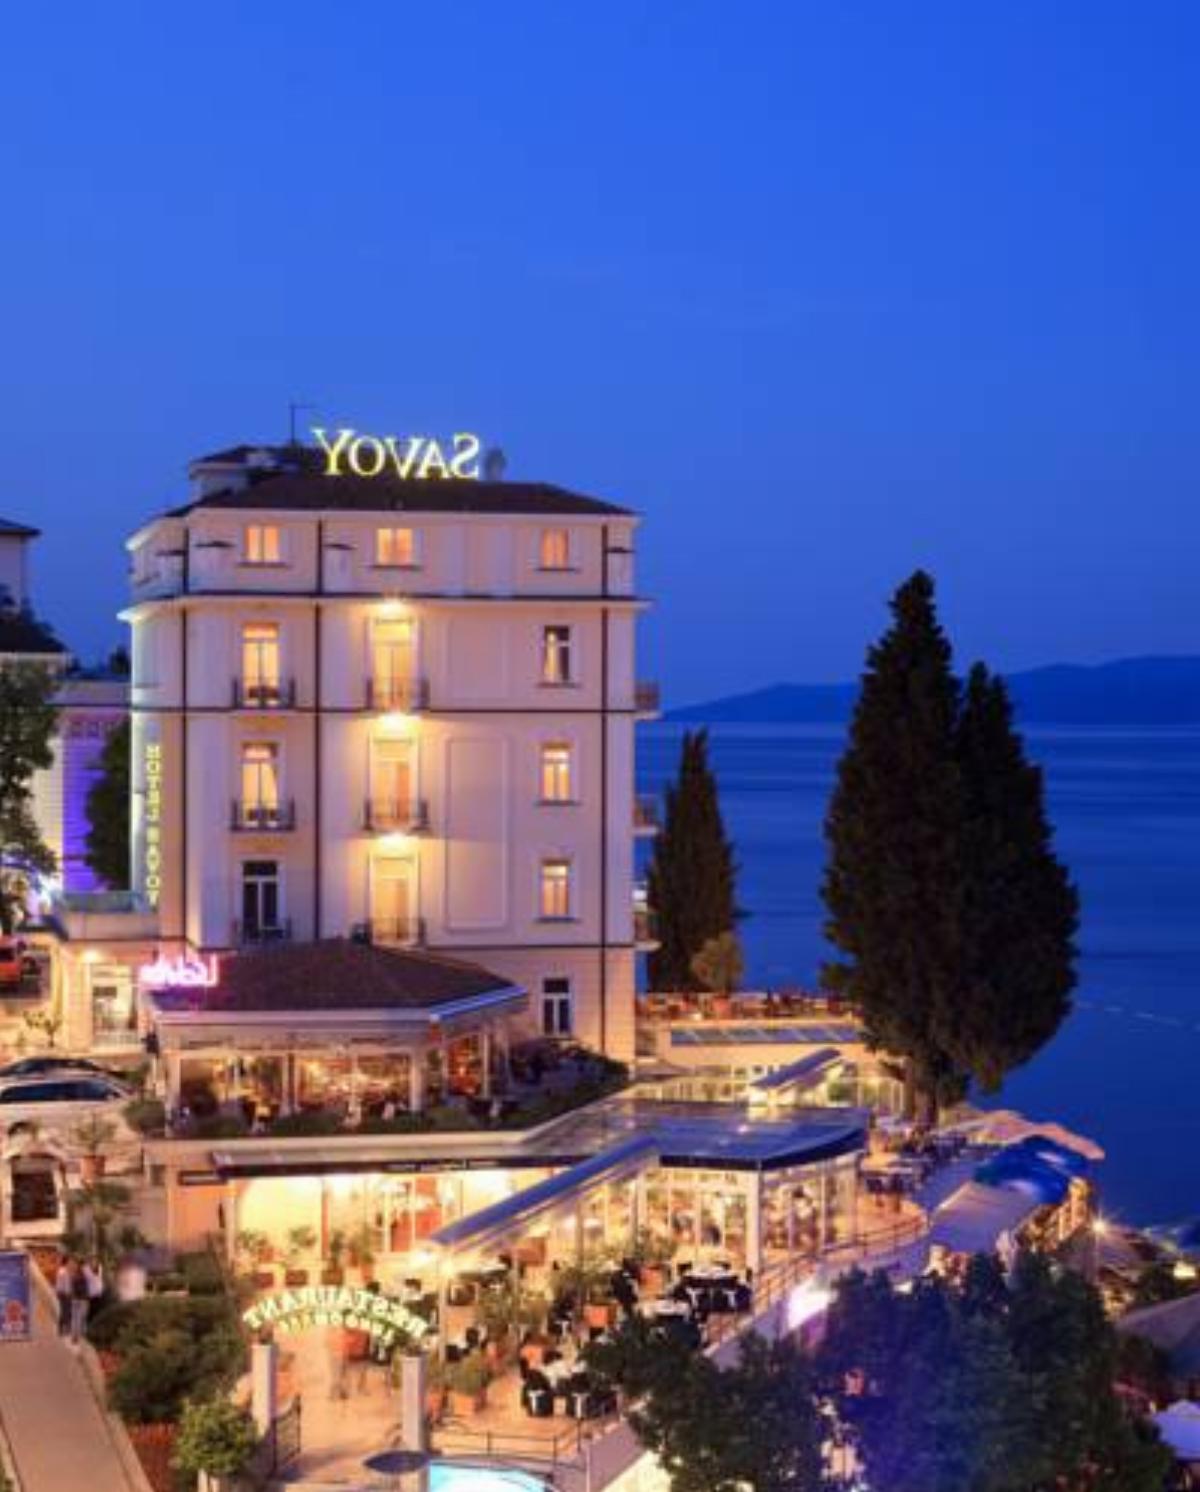 Hotel Savoy Hotel Opatija Croatia